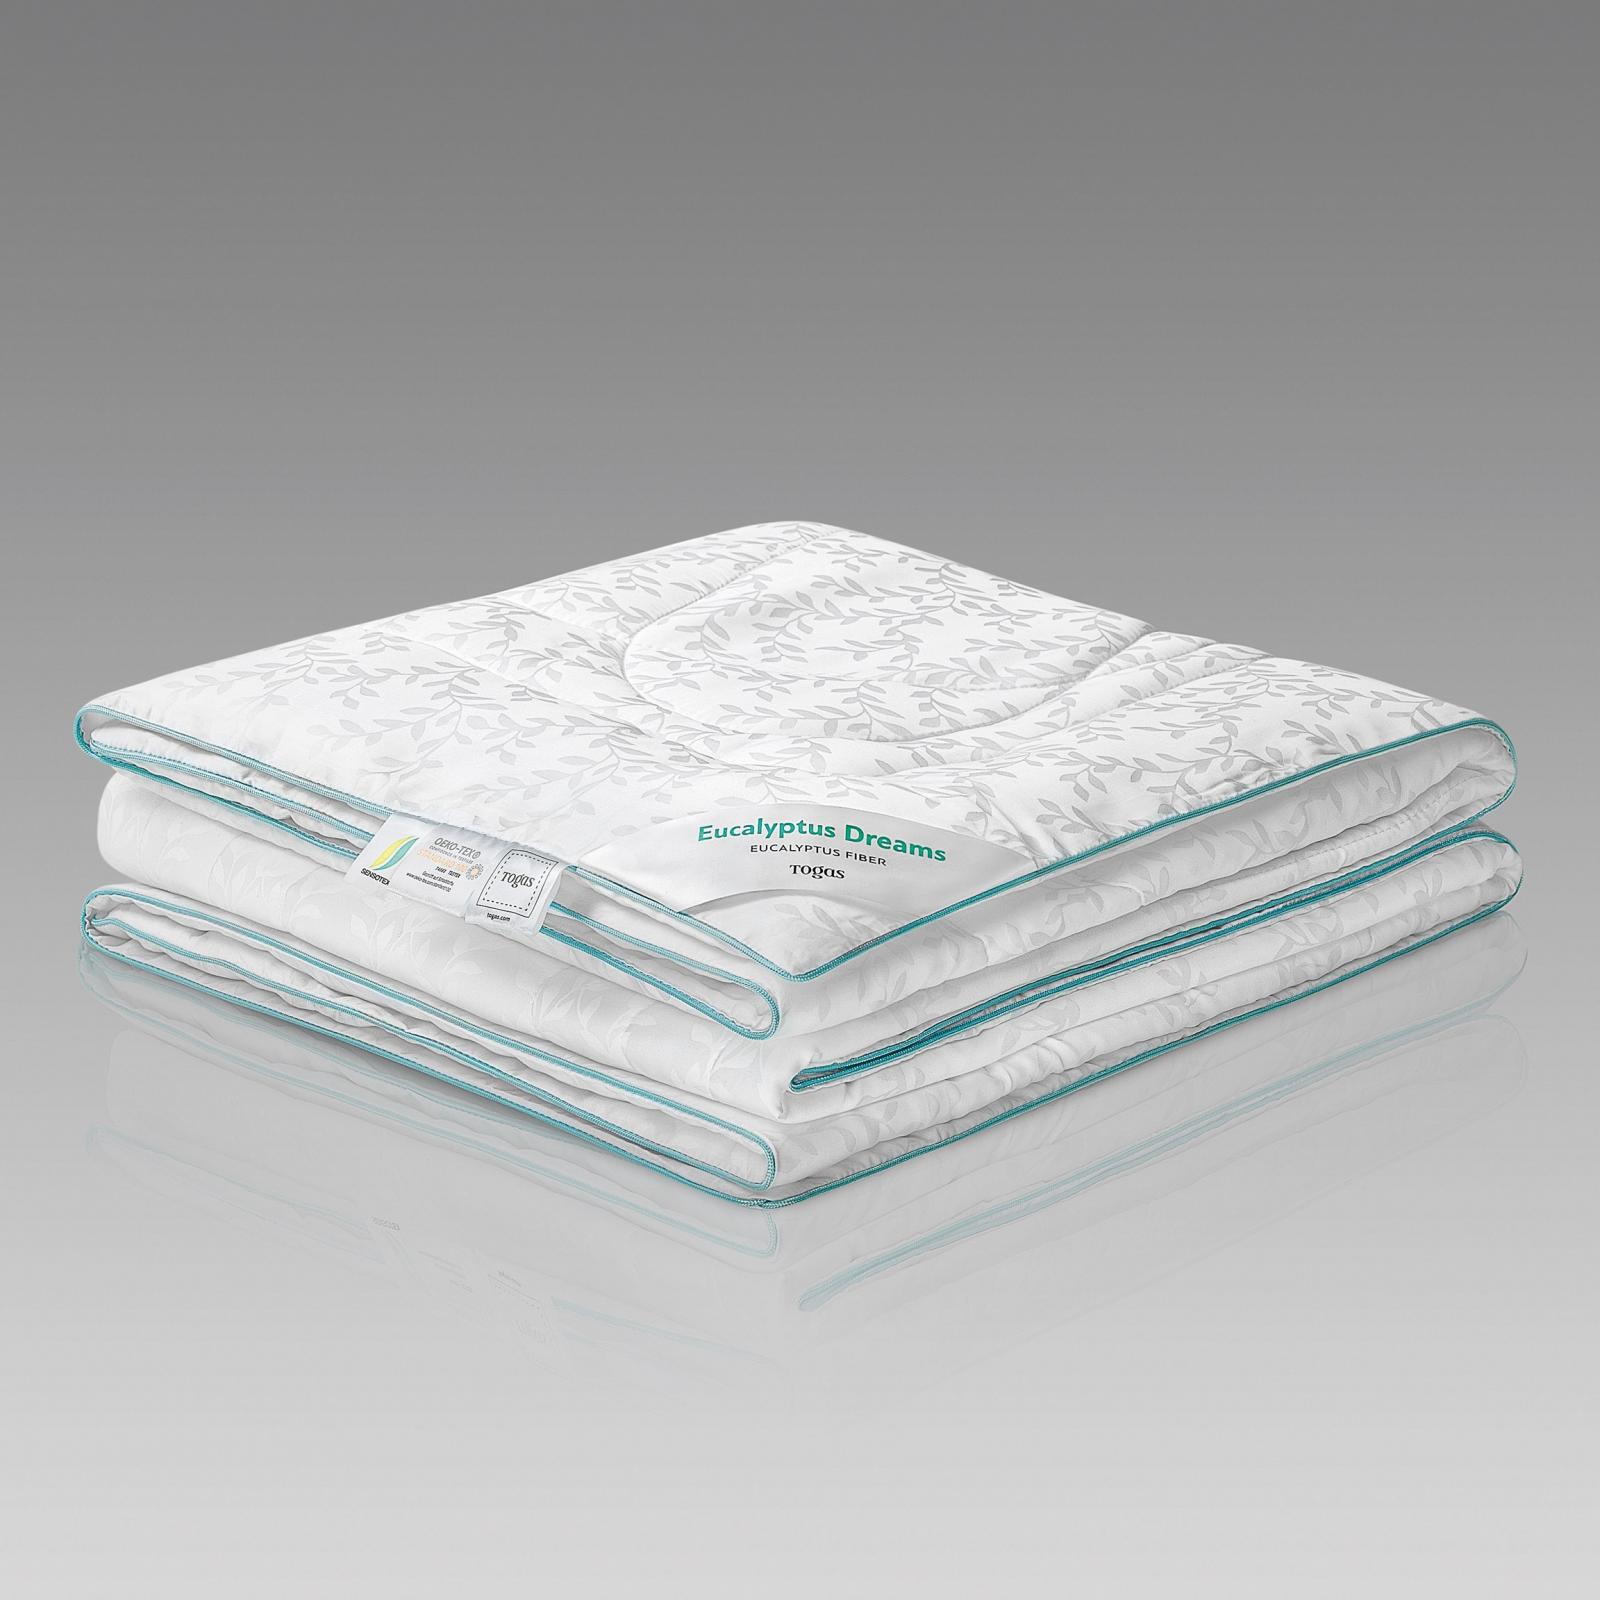 Одеяло Togas эвкалипт дримс 140х200, размер 140х200 см - фото 1